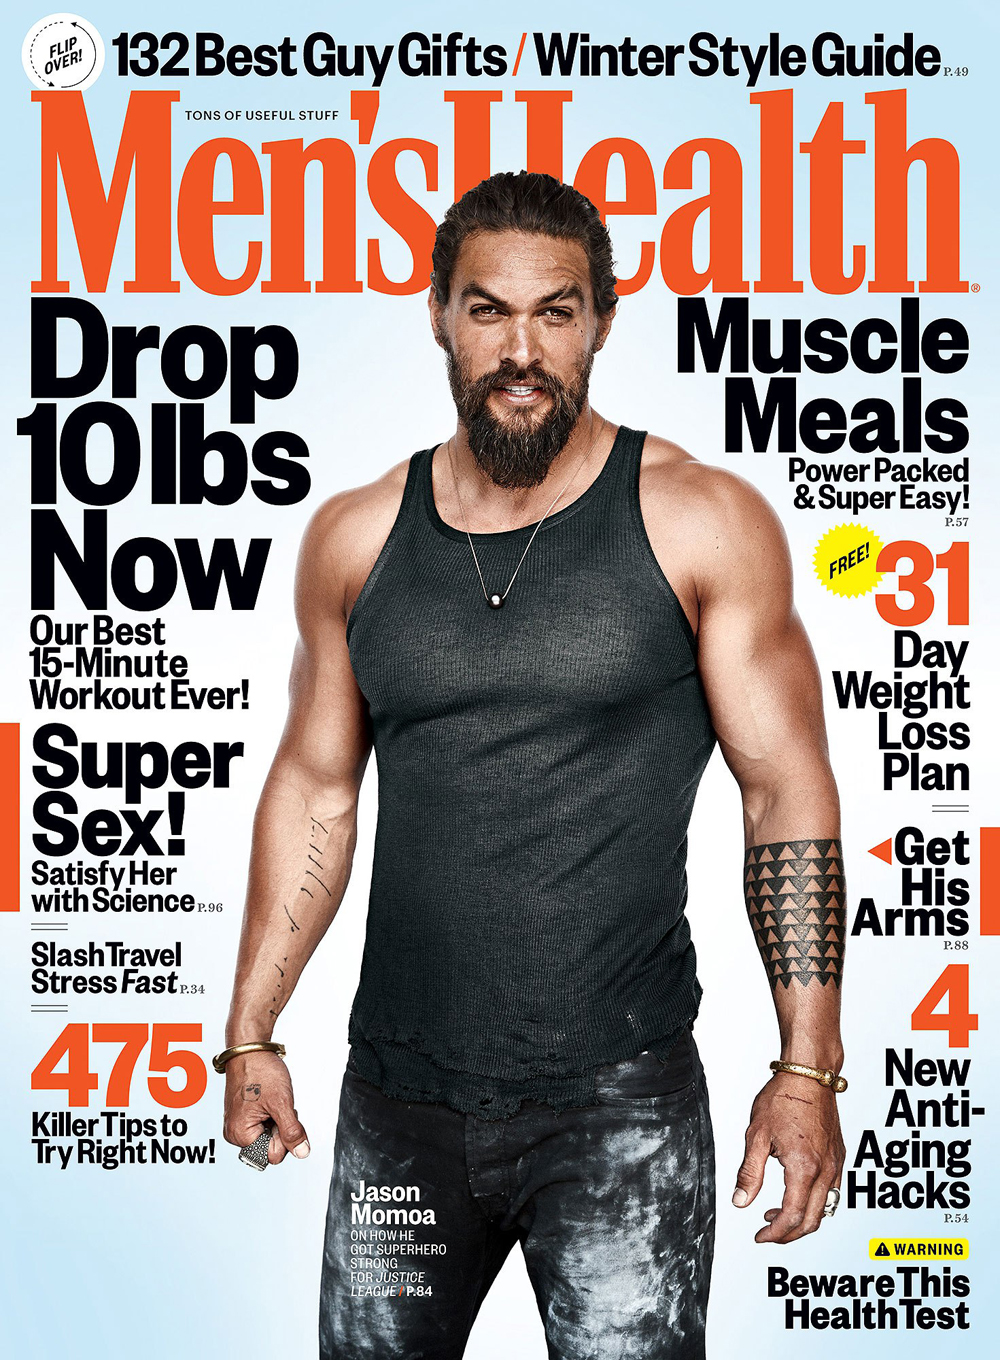 Thor Star Chris Hemsworth for Mens Health Magazine 